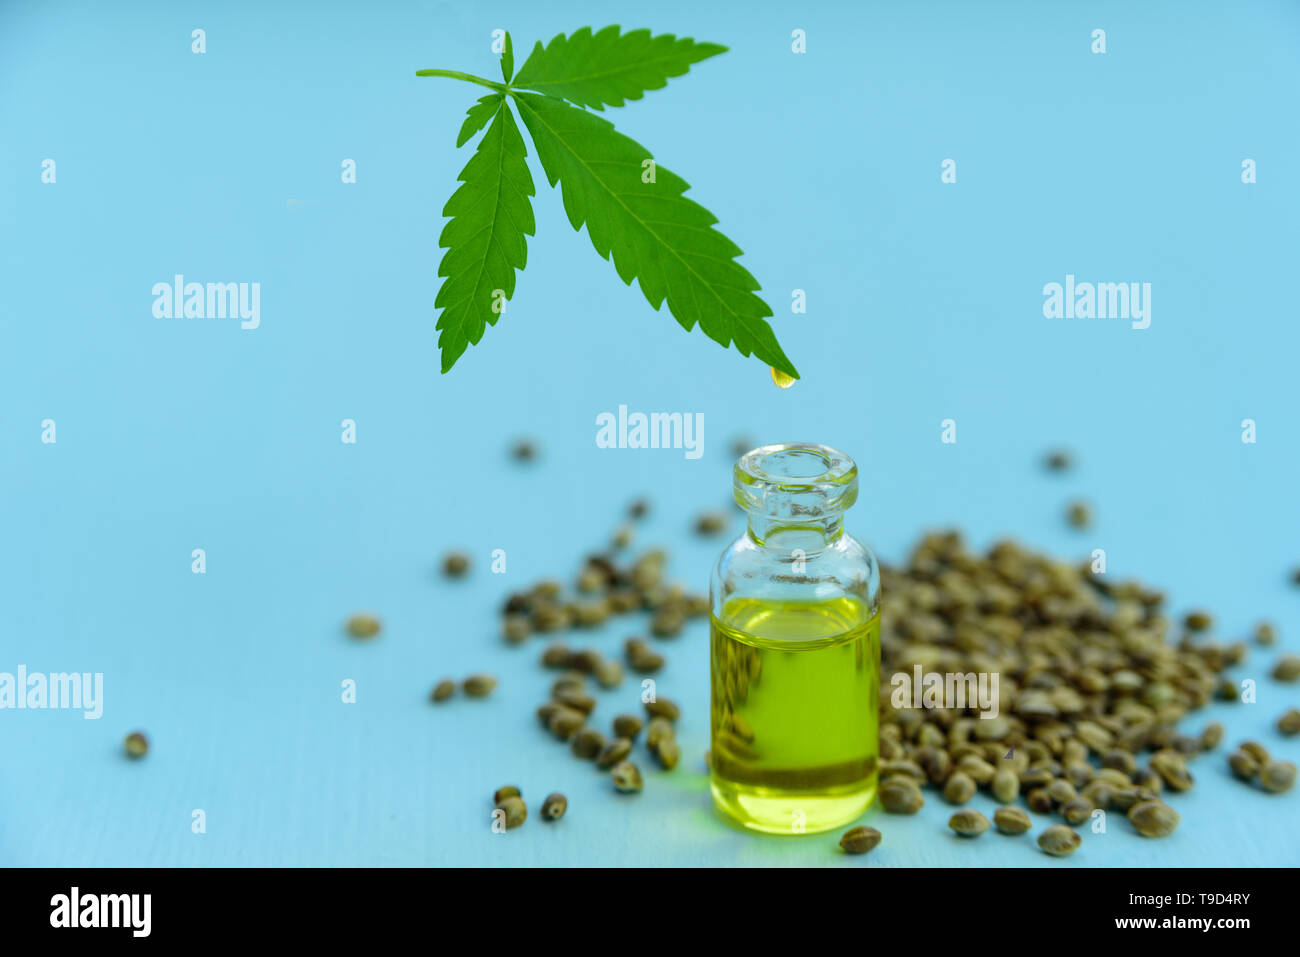 Hemp oil in glass bottle, seeds and leaf on light blue background. Leaf levitating over the jar Stock Photo